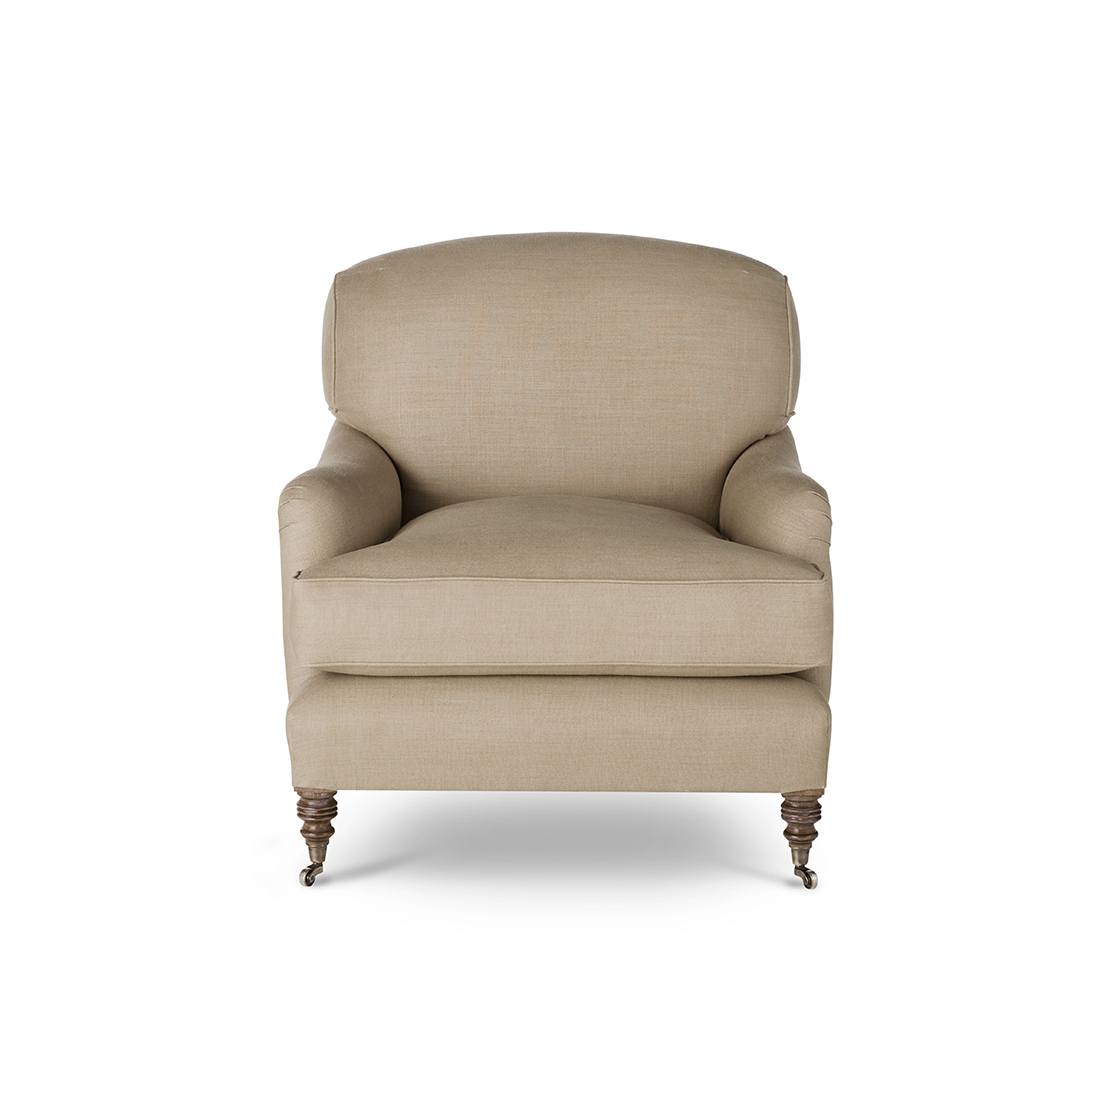 Howard chair in Bantry linen - Dark honey - Beaumont & Fletcher